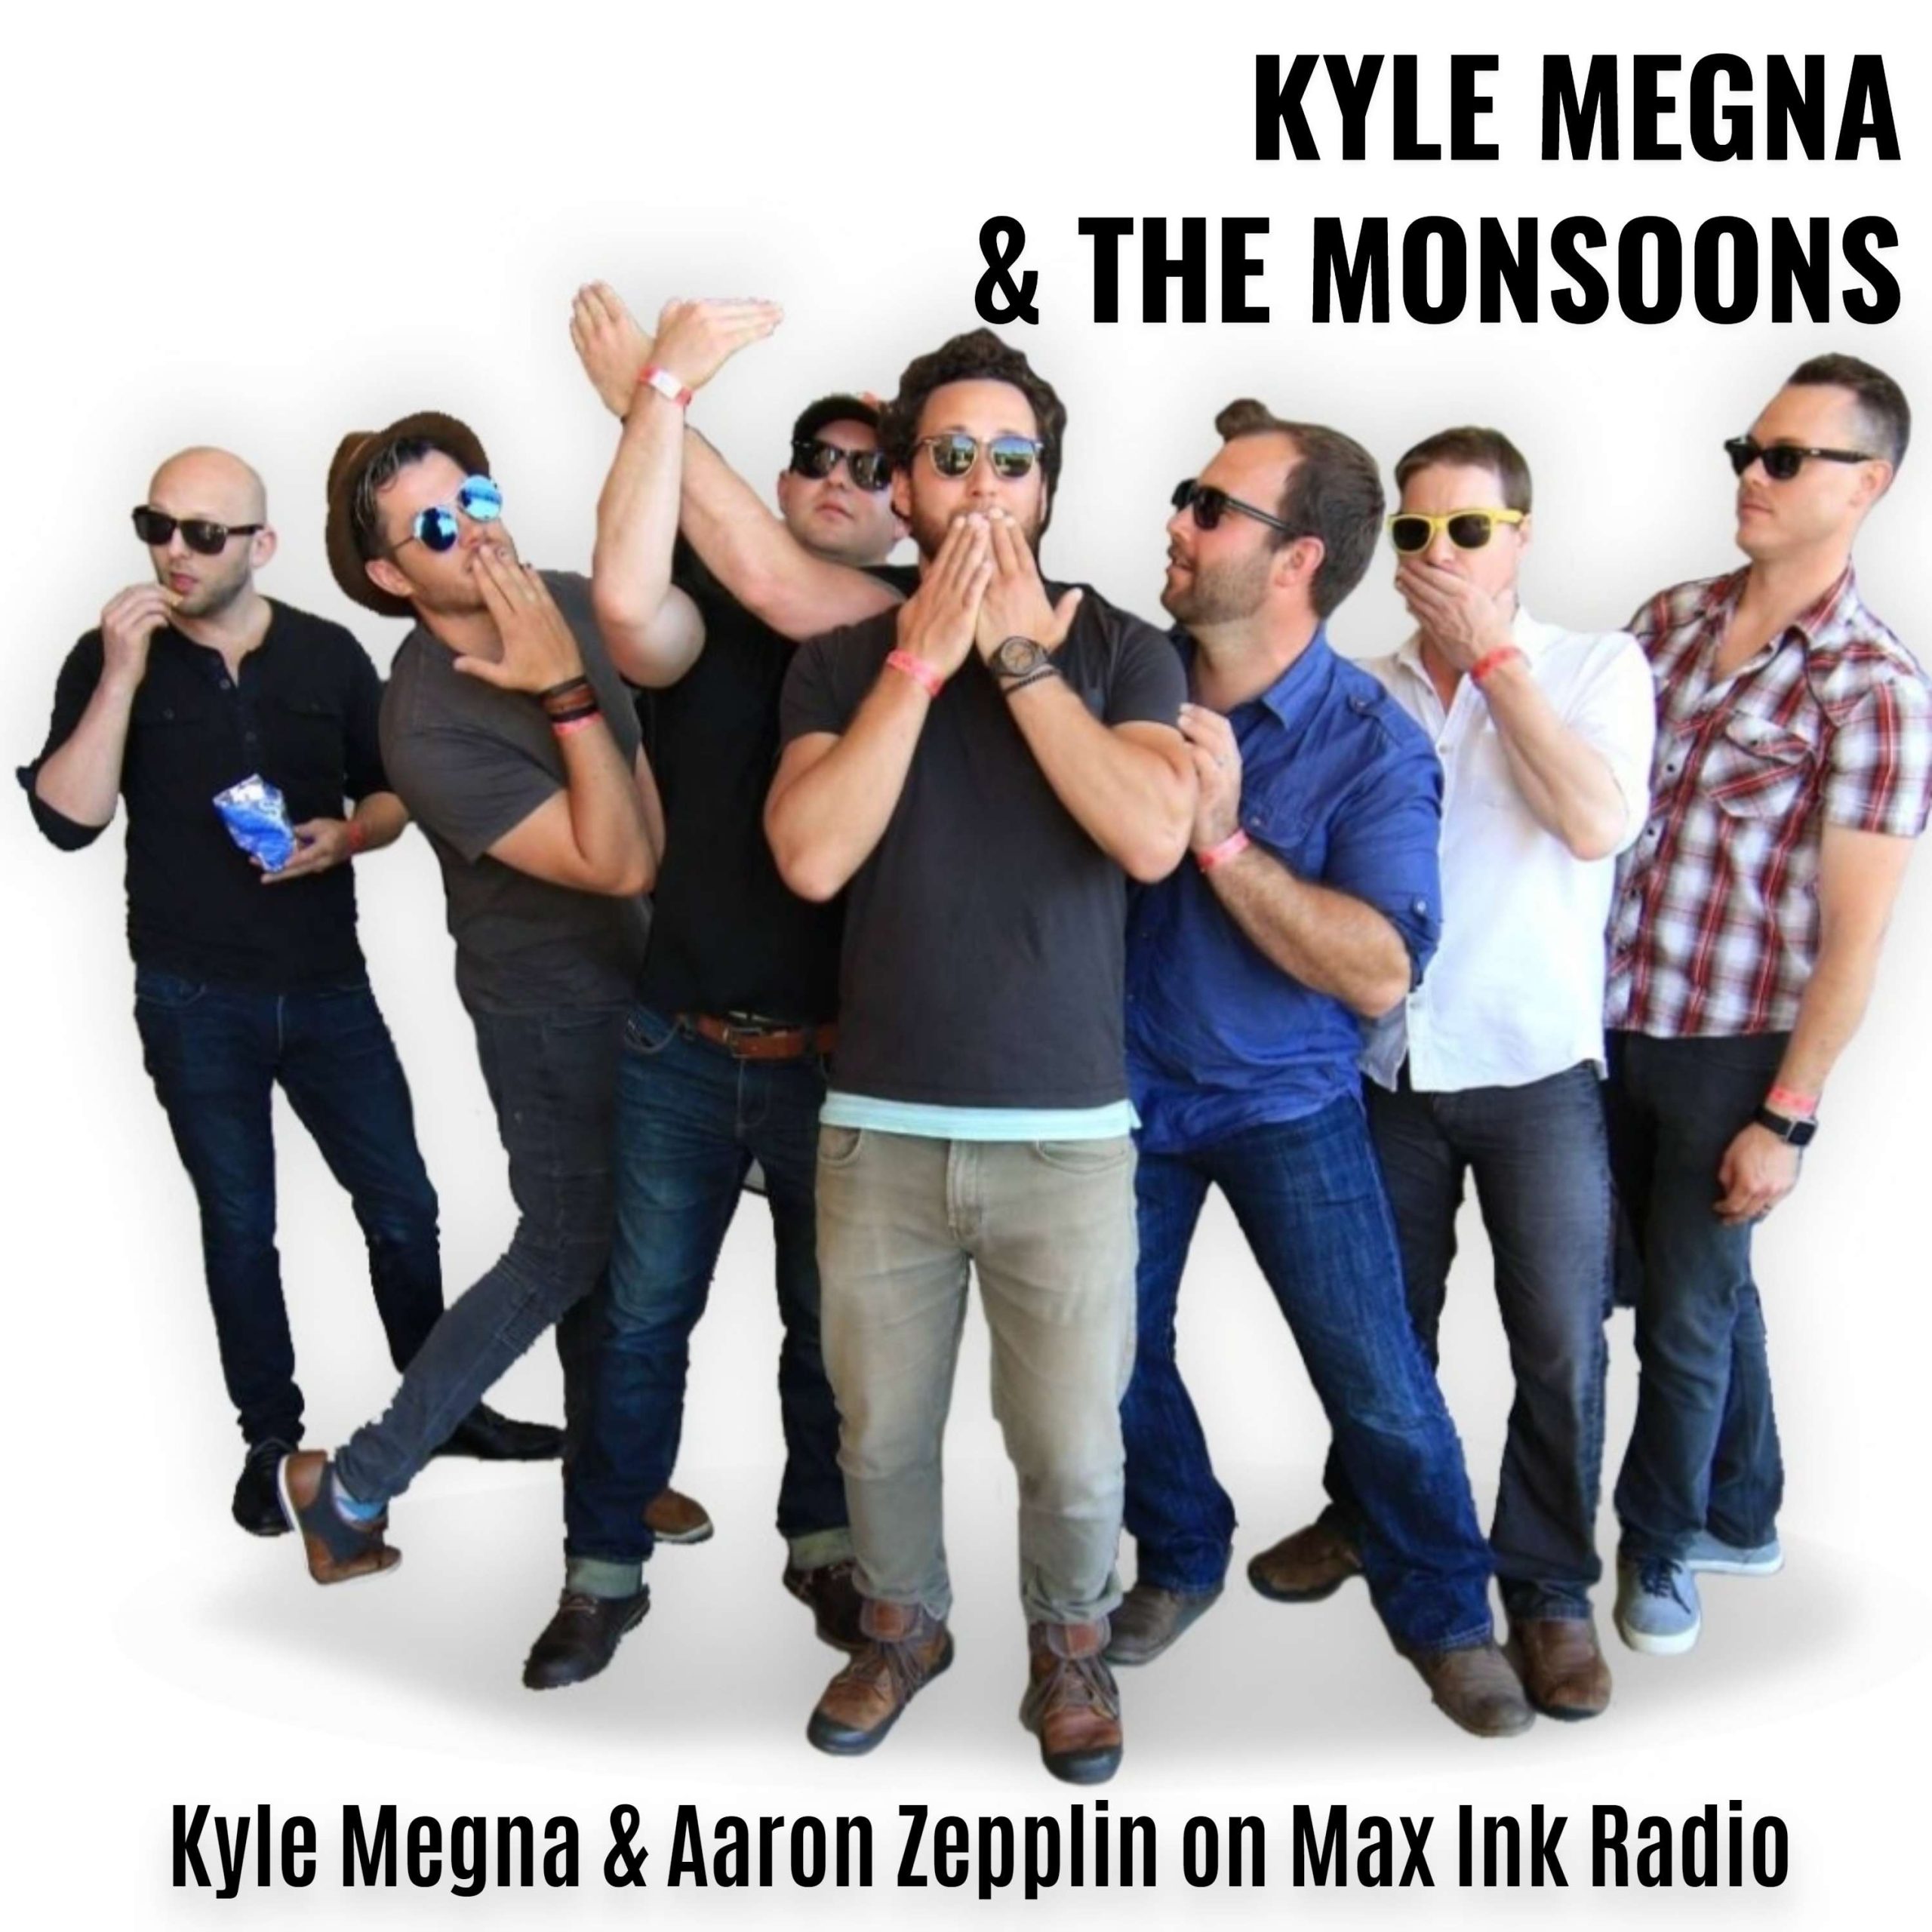 Kyle Megna & the Monsoons